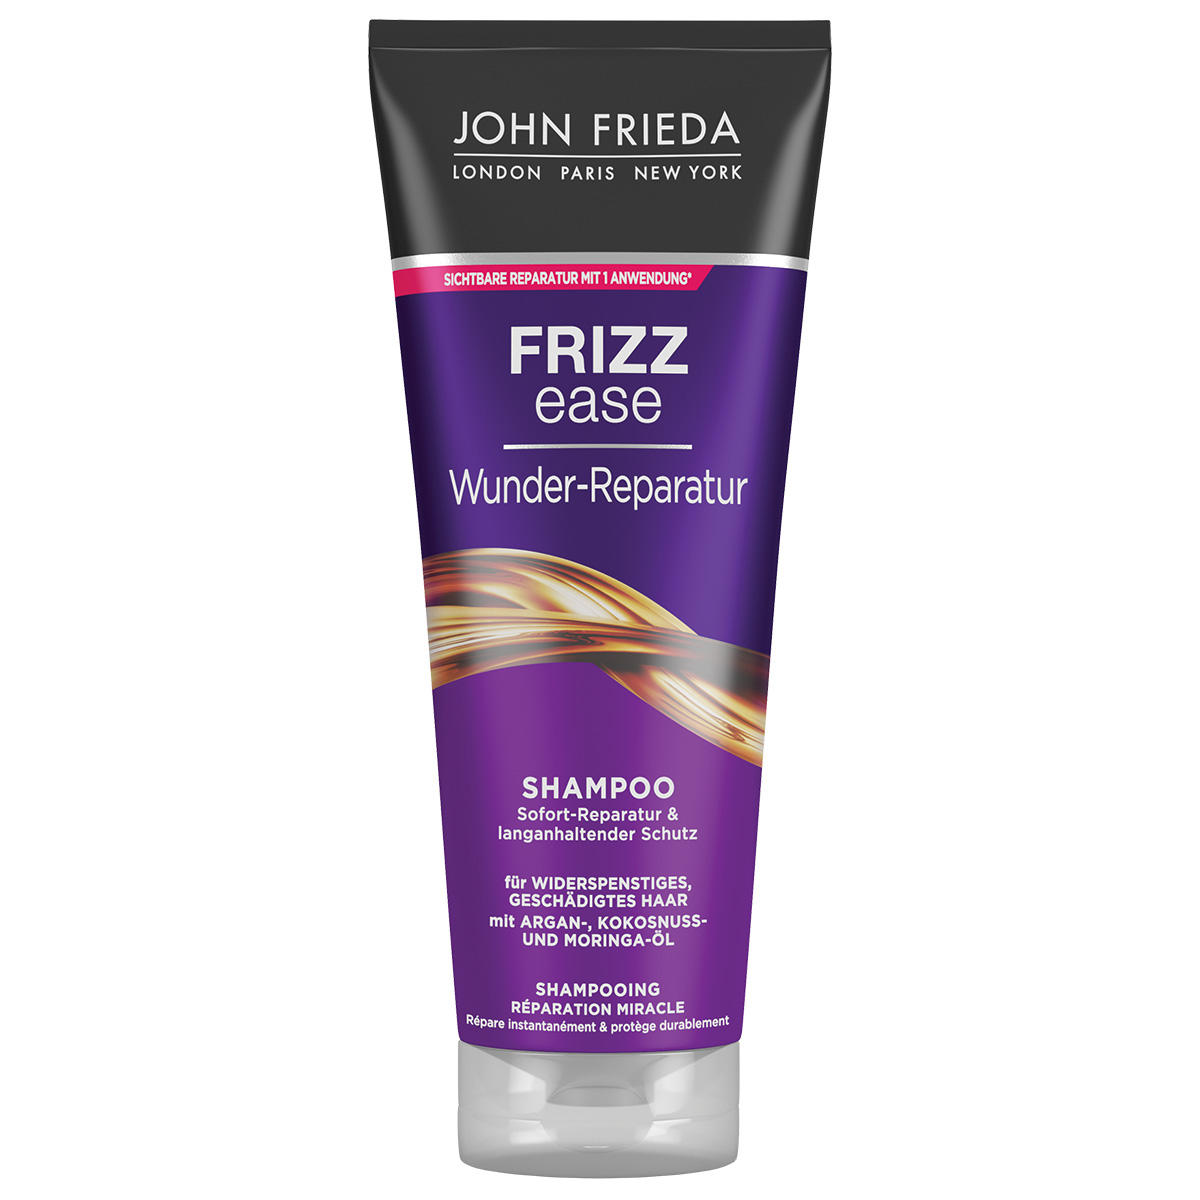 JOHN FRIEDA Frizz Ease Shampooing réparateur miracle  - 1